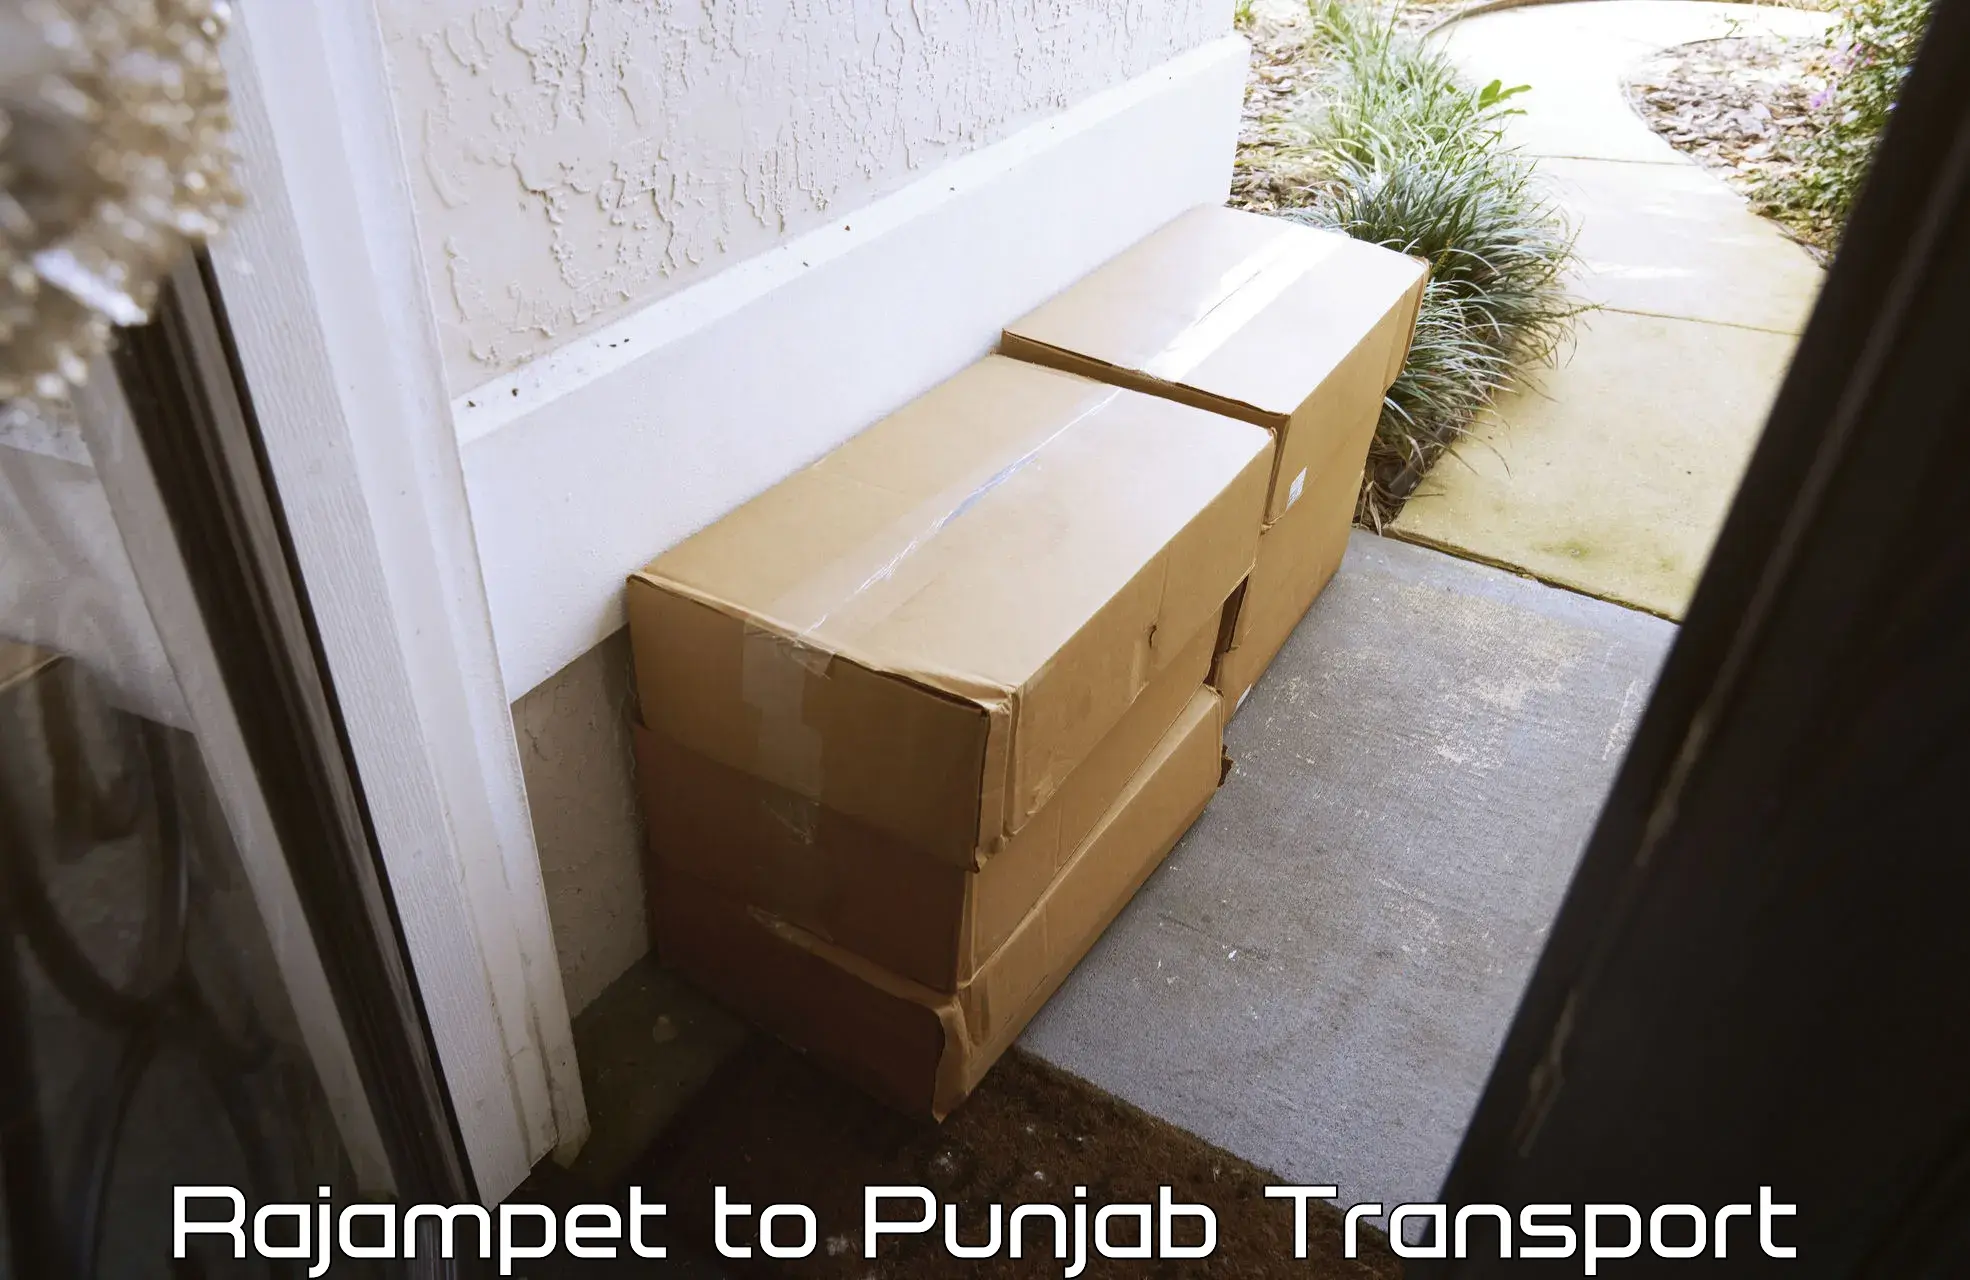 Delivery service Rajampet to Punjab